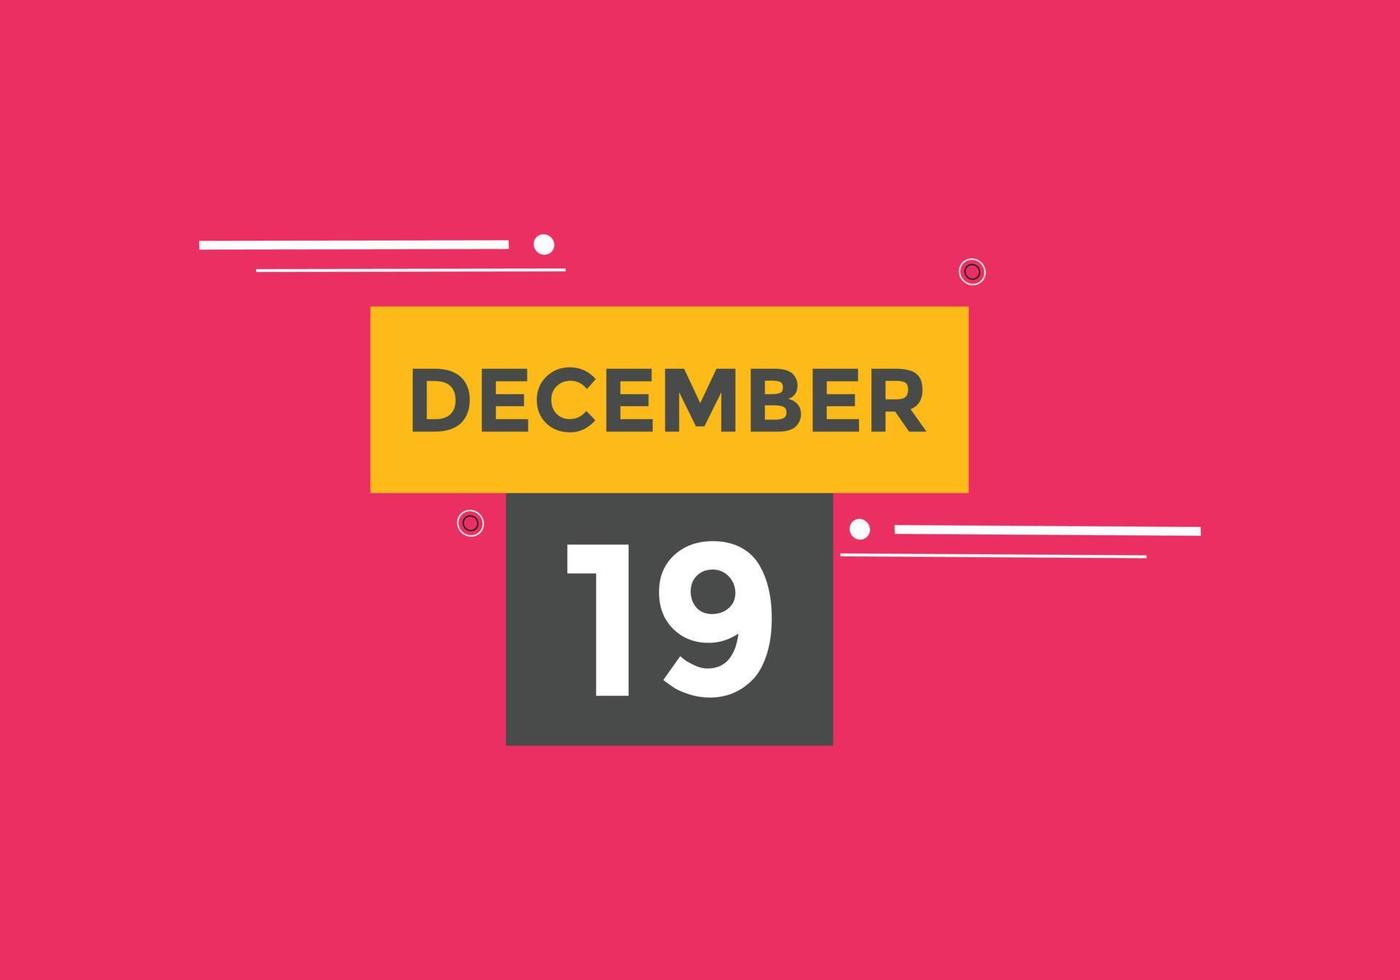 december 19 calendar reminder. 19th december daily calendar icon template. Calendar 19th december icon Design template. Vector illustration